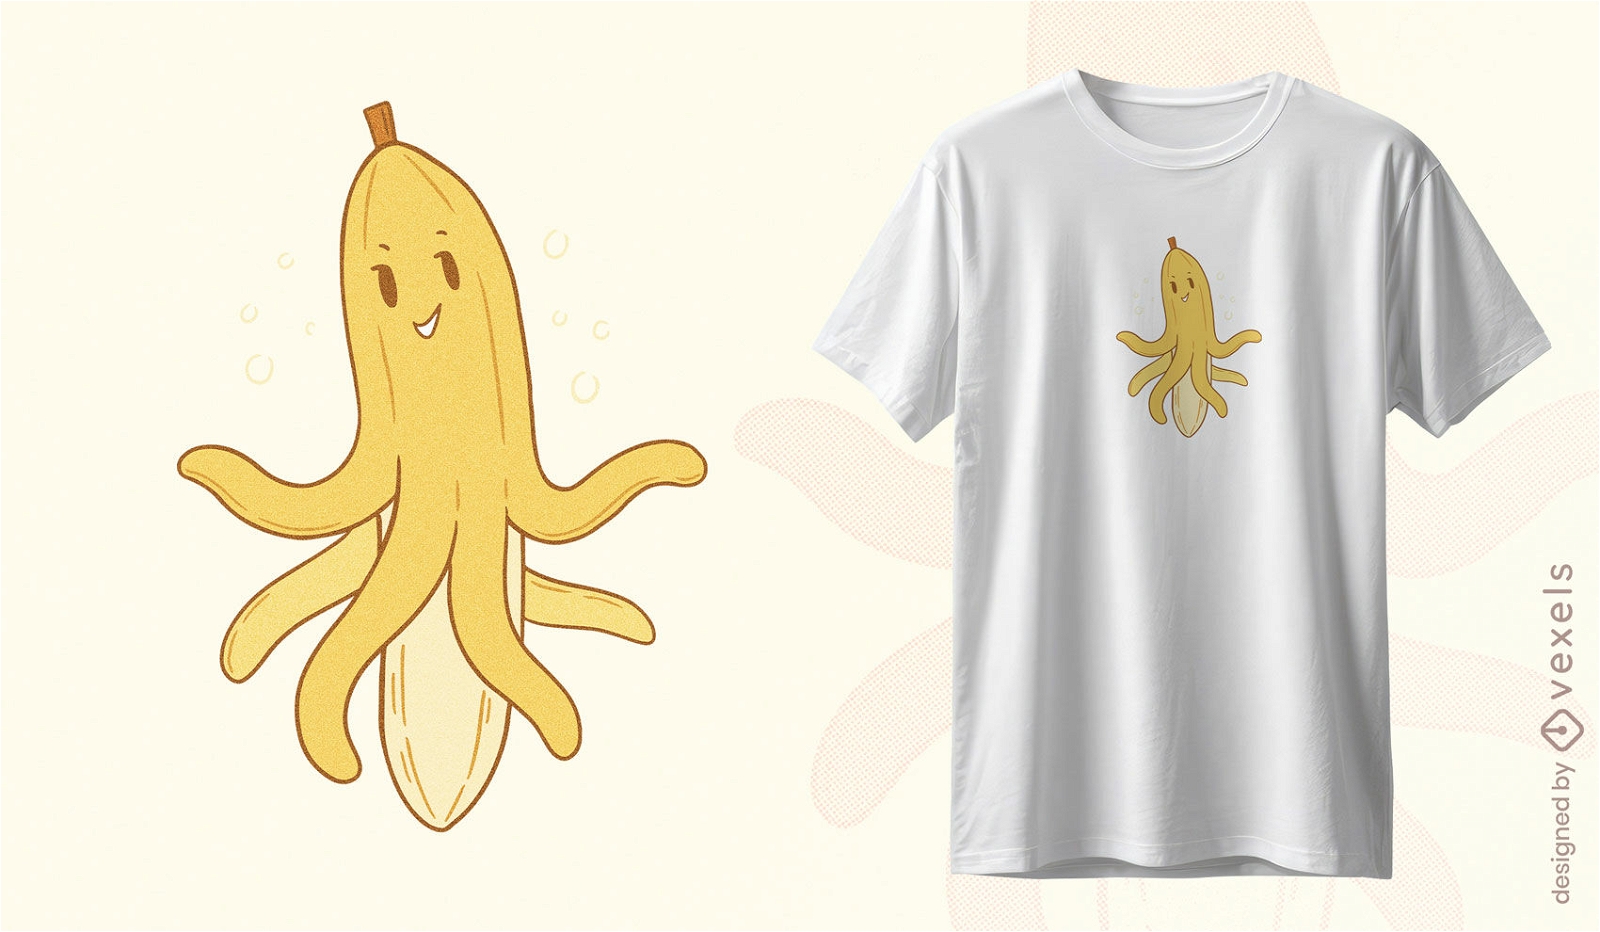 Fr?hliches T-Shirt-Design mit Bananencharakter